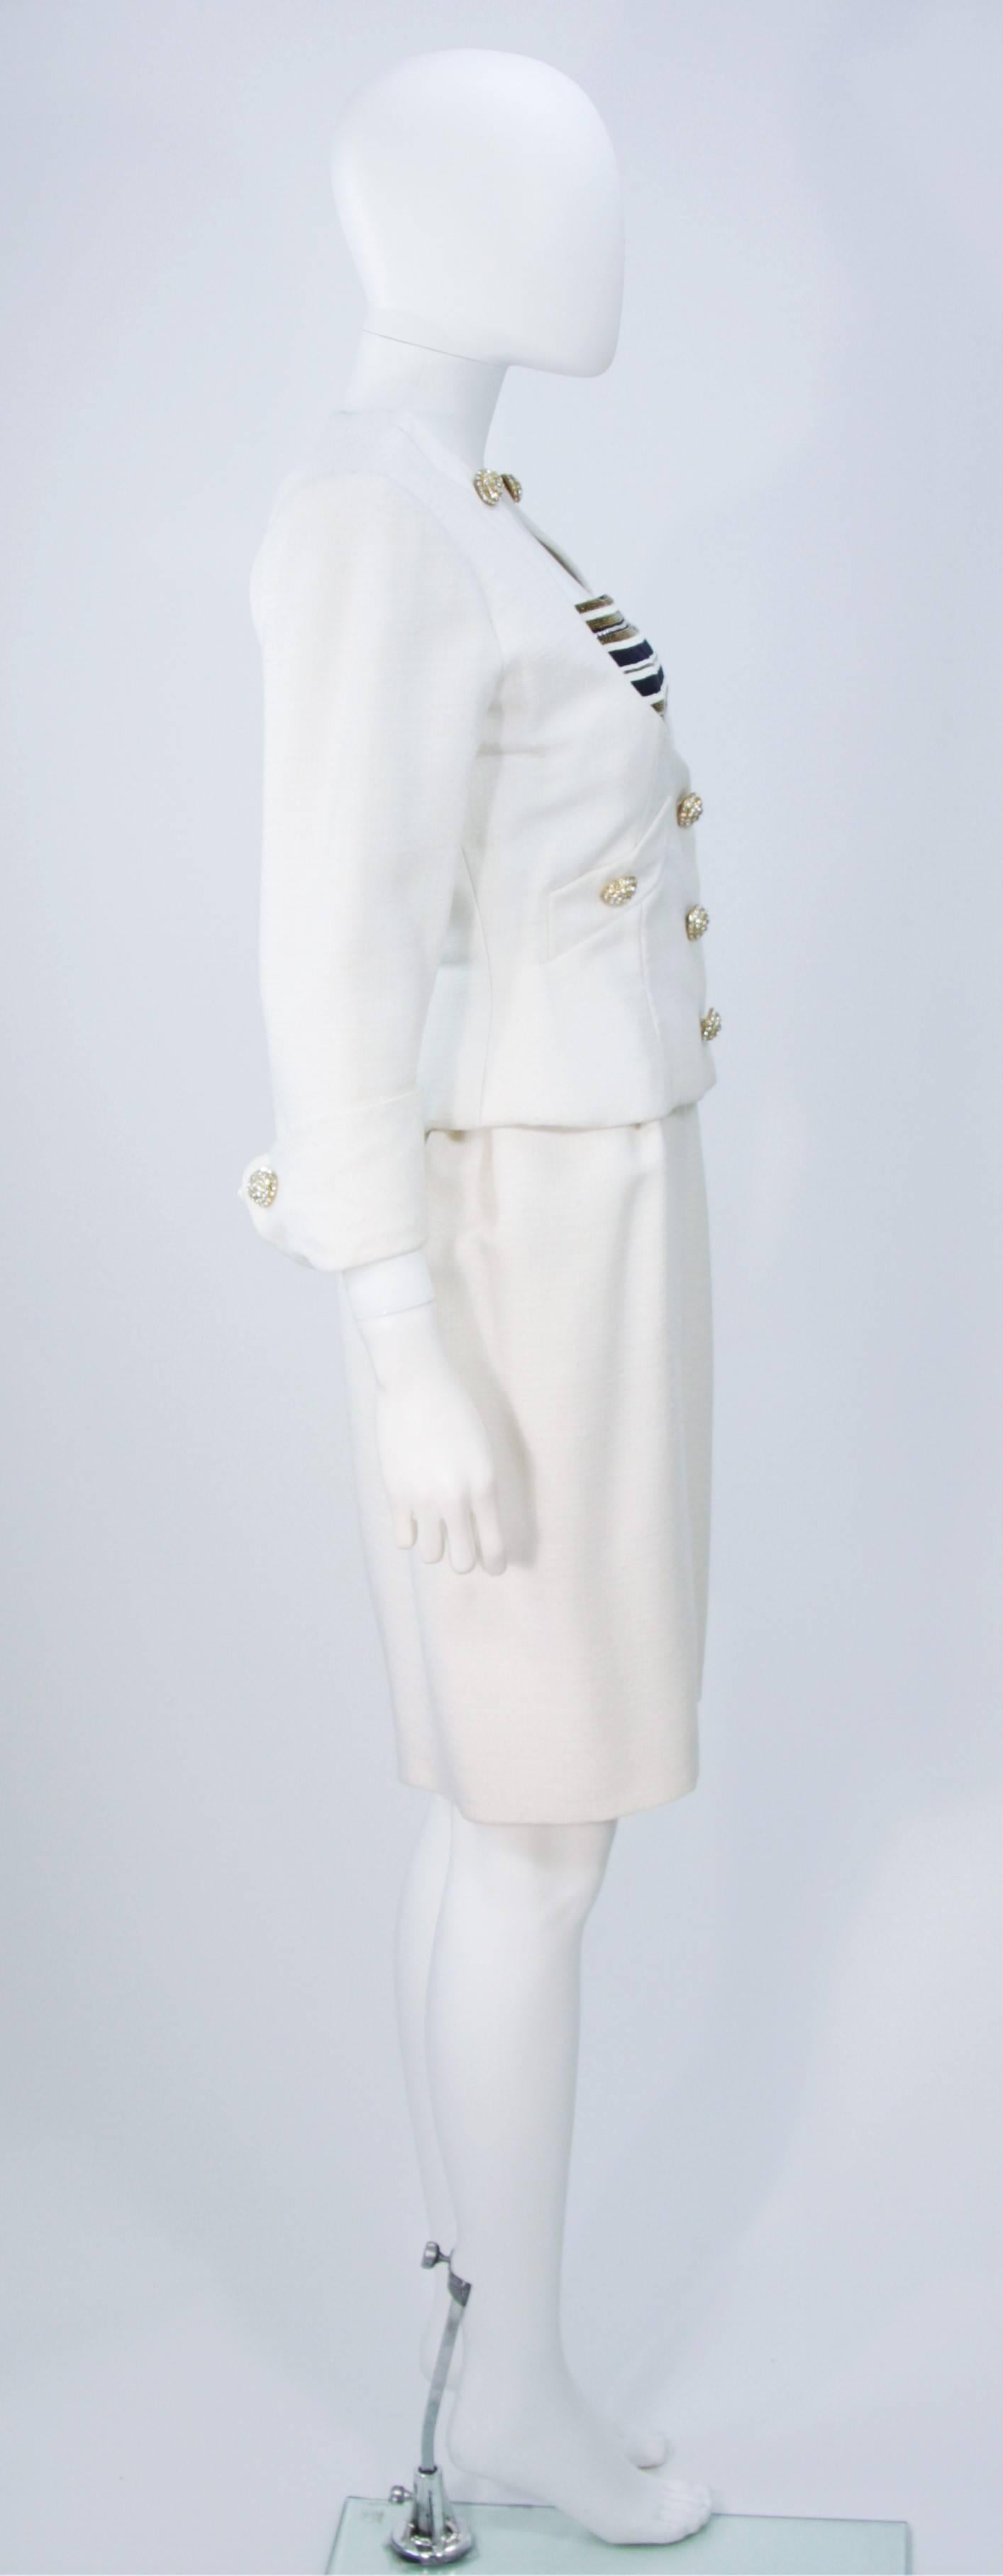 Women's JEAN PATOU COUTURE Embellished White Gold & Navy Linen Dress Ensemble Size 2-4 For Sale